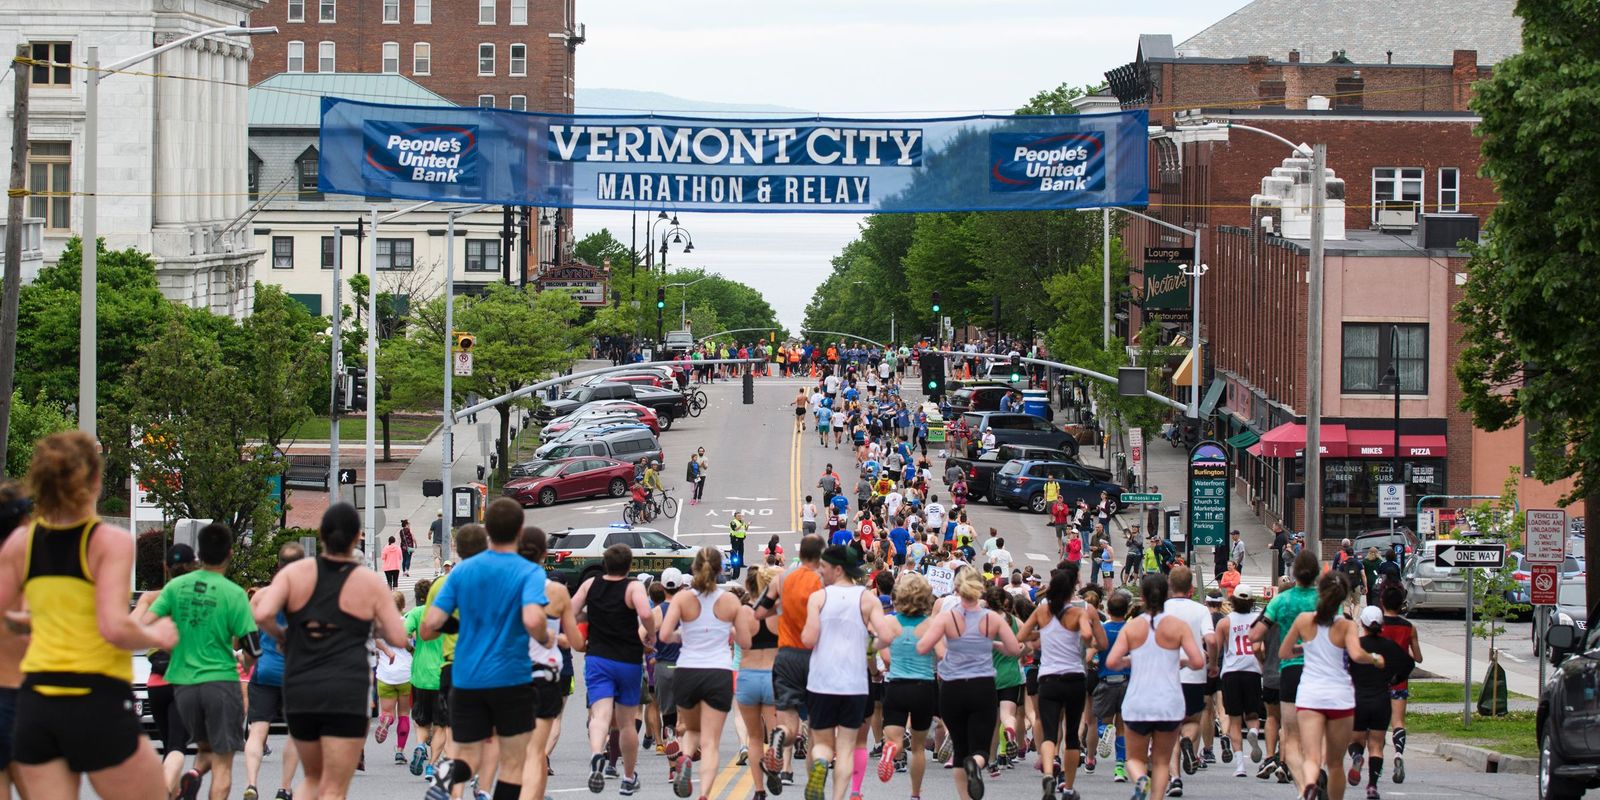 People's United Bank Vermont City Marathon